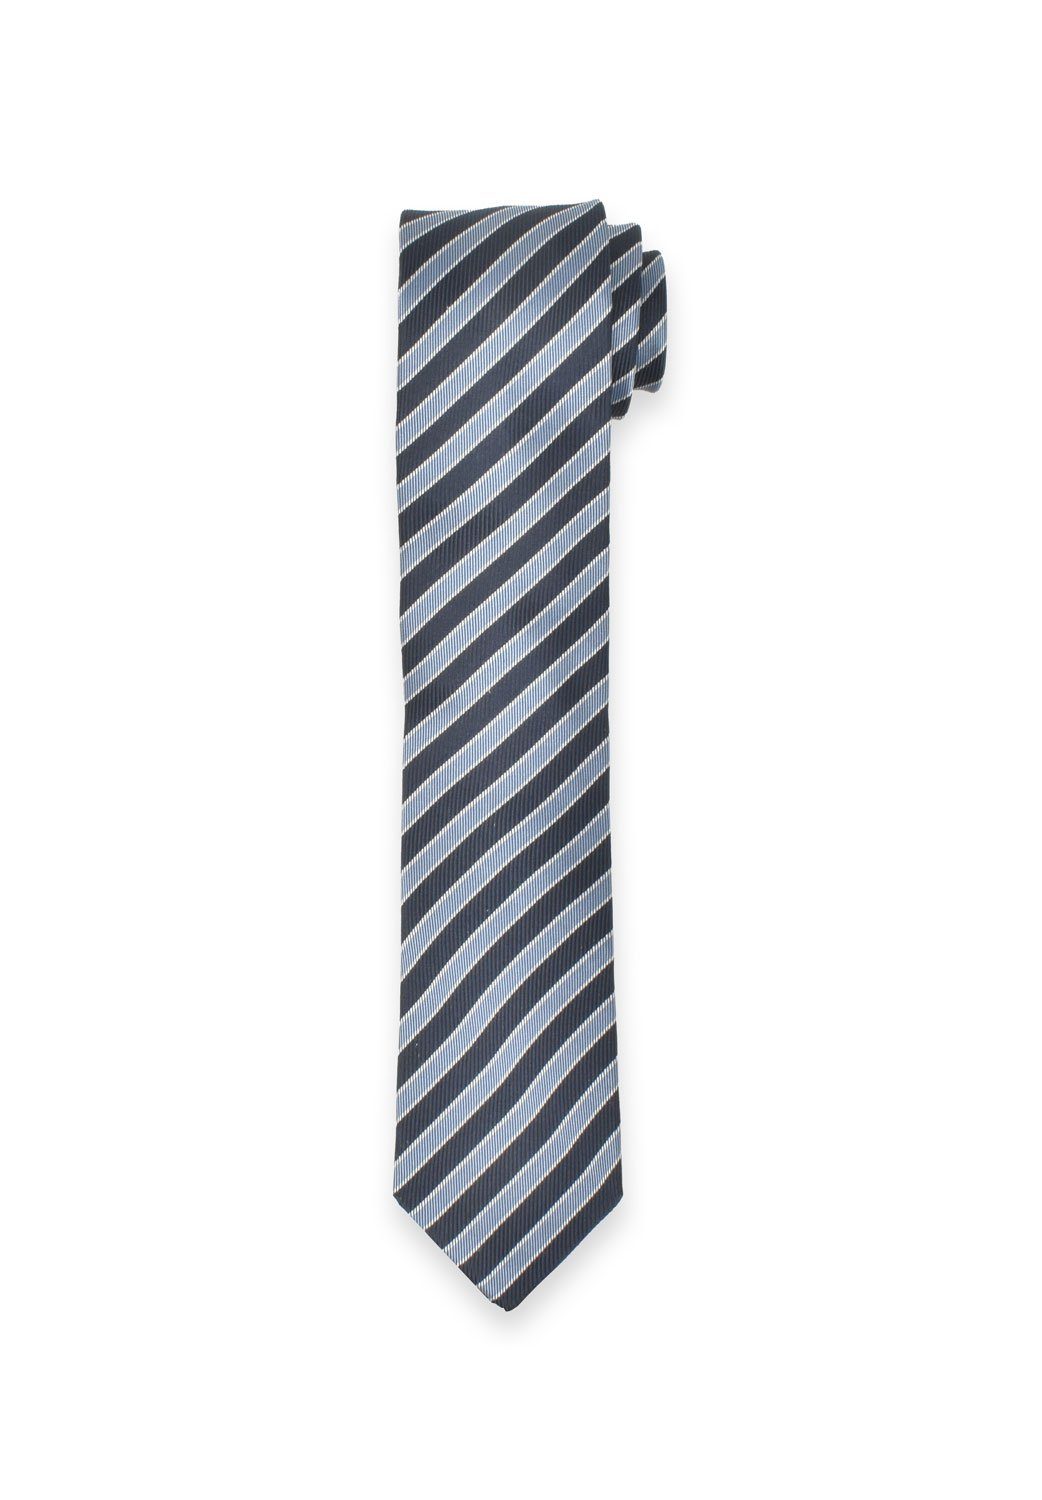 MARVELIS Krawatte Krawatte - Gestreift - Hellblau/Dunkelblau - 6,5 cm